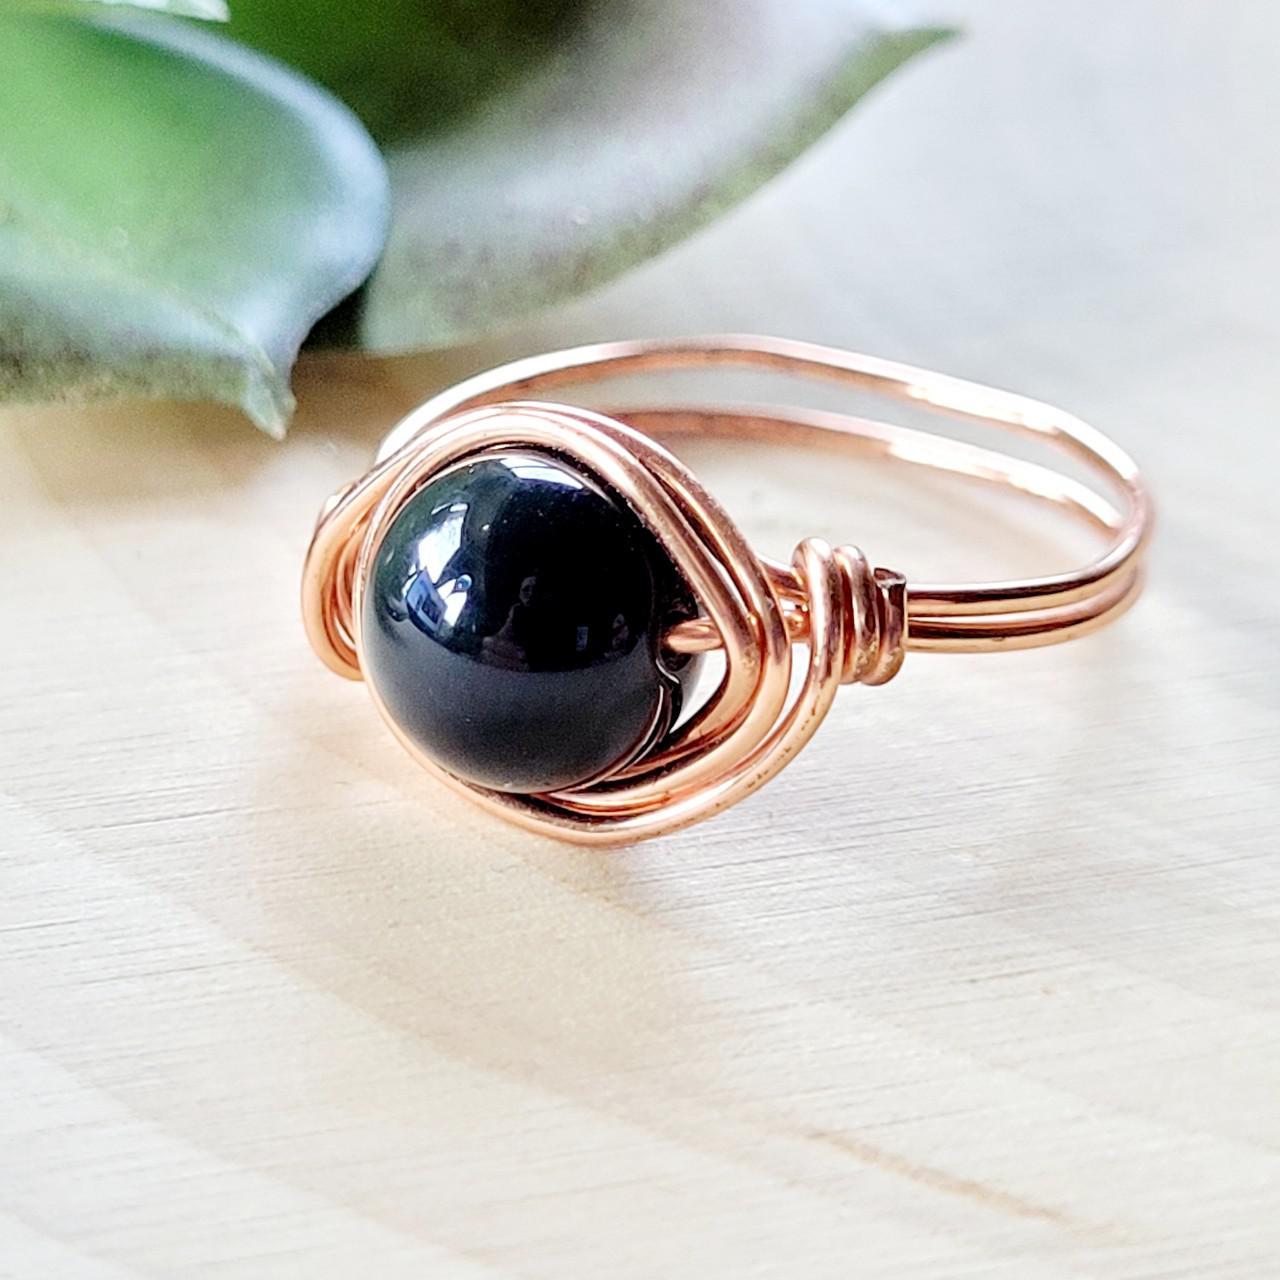 Product Image 2 - Crystal ring.
Genuine polished Rainbow Obsidian